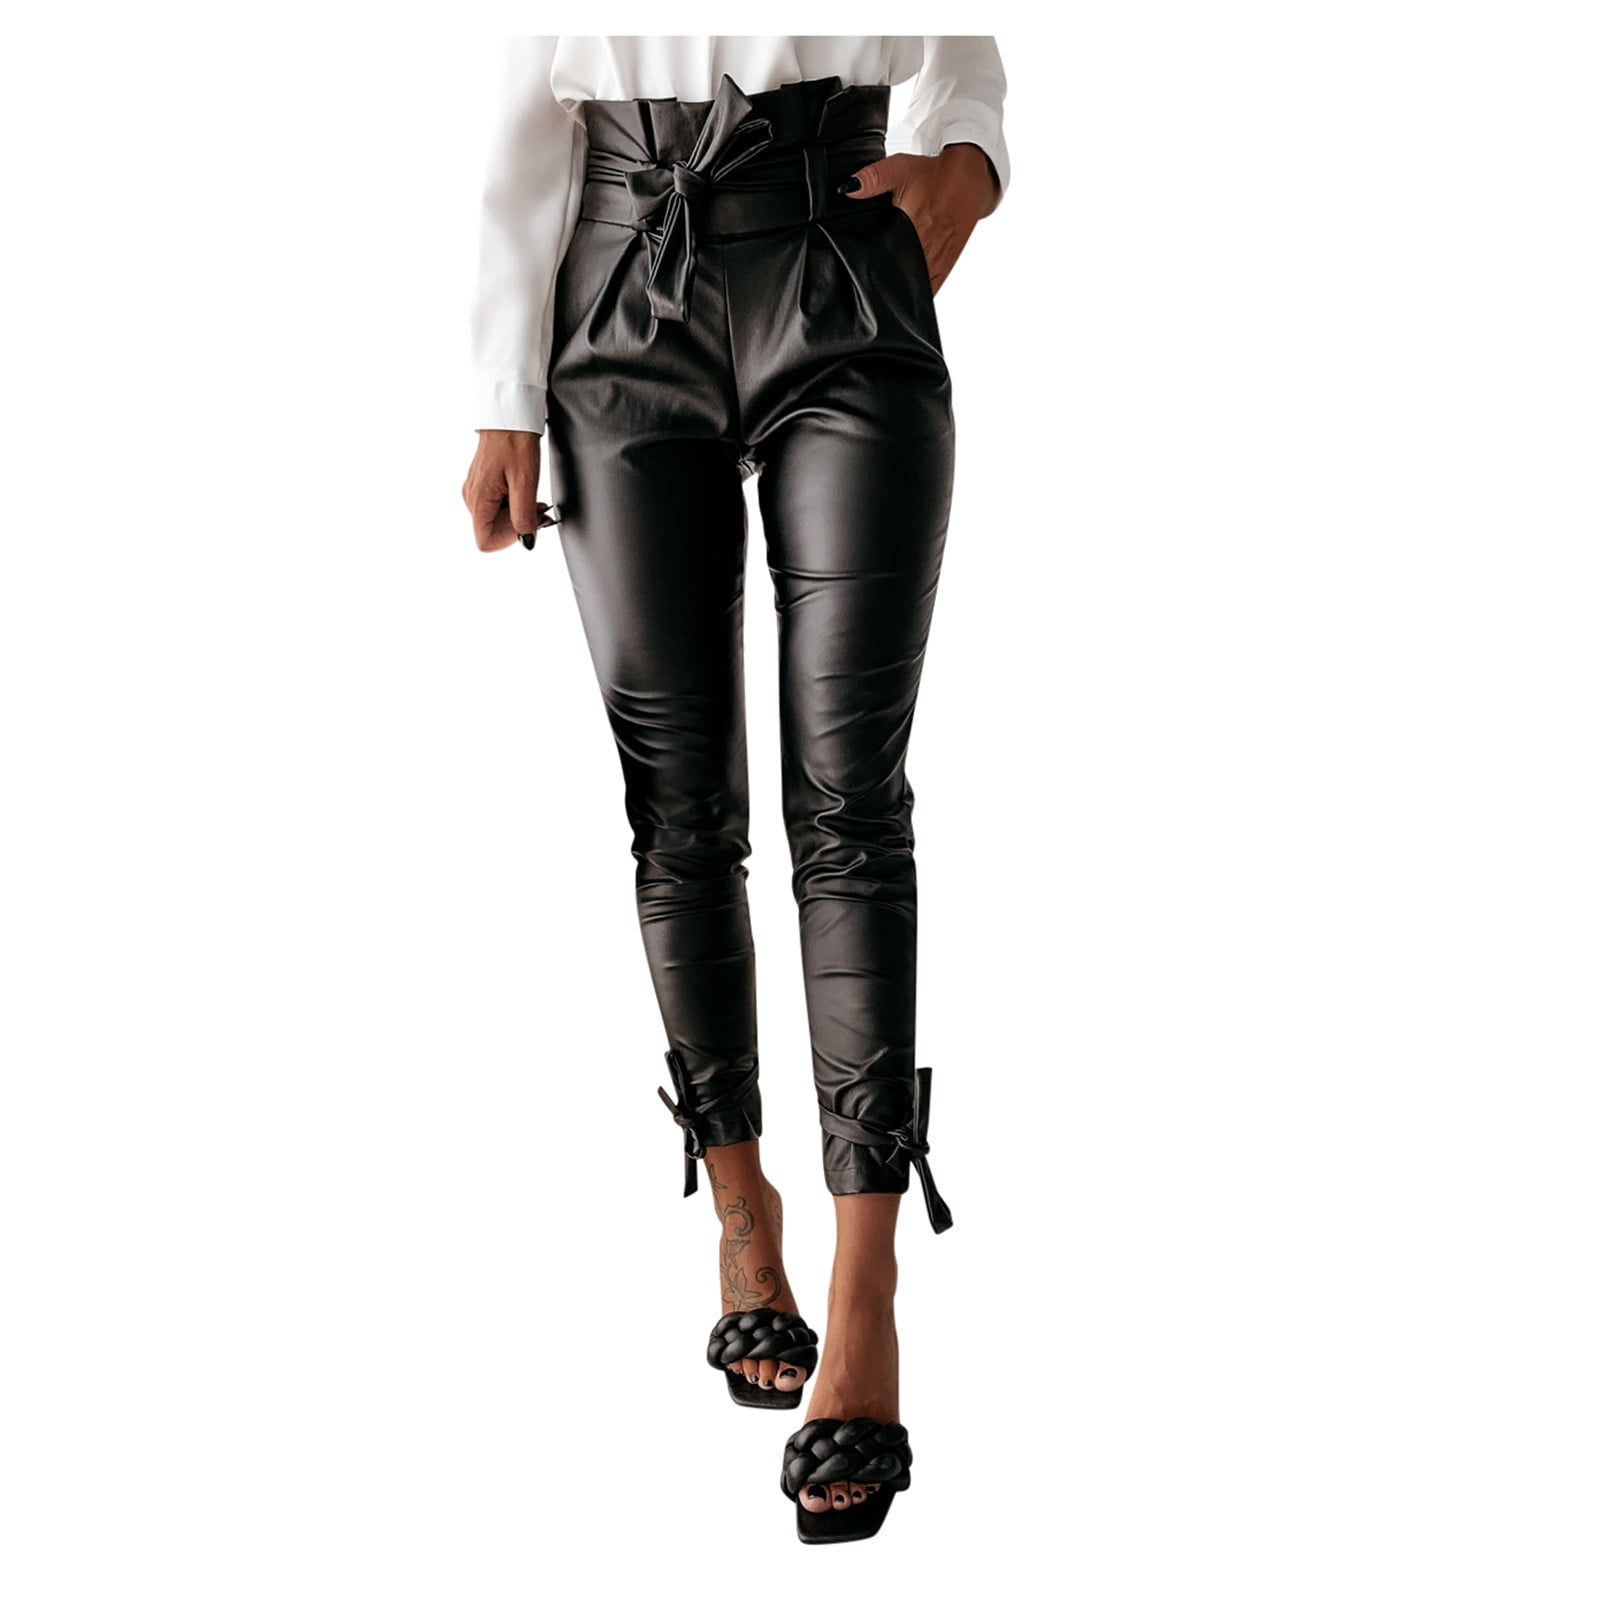 gvdentm Leather Pants Women's Curvy Fit Gabardine Bootcut Dress